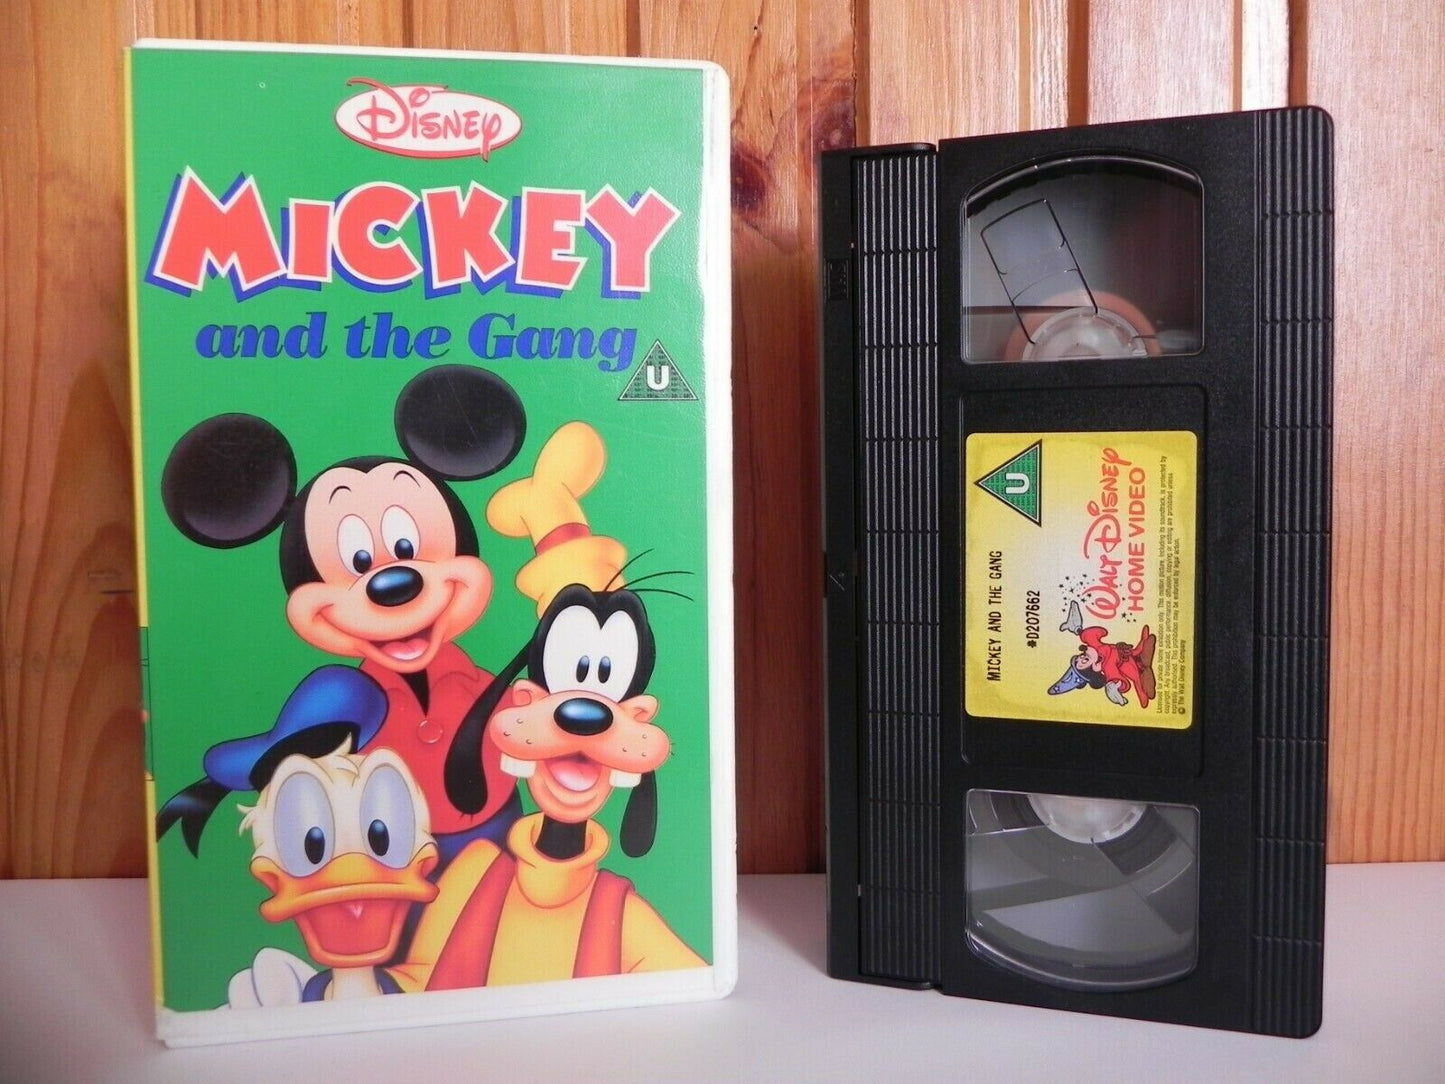 Mickey And The Gang - Walt Disney Original - Kid's Video - D207662 - Pal VHS-